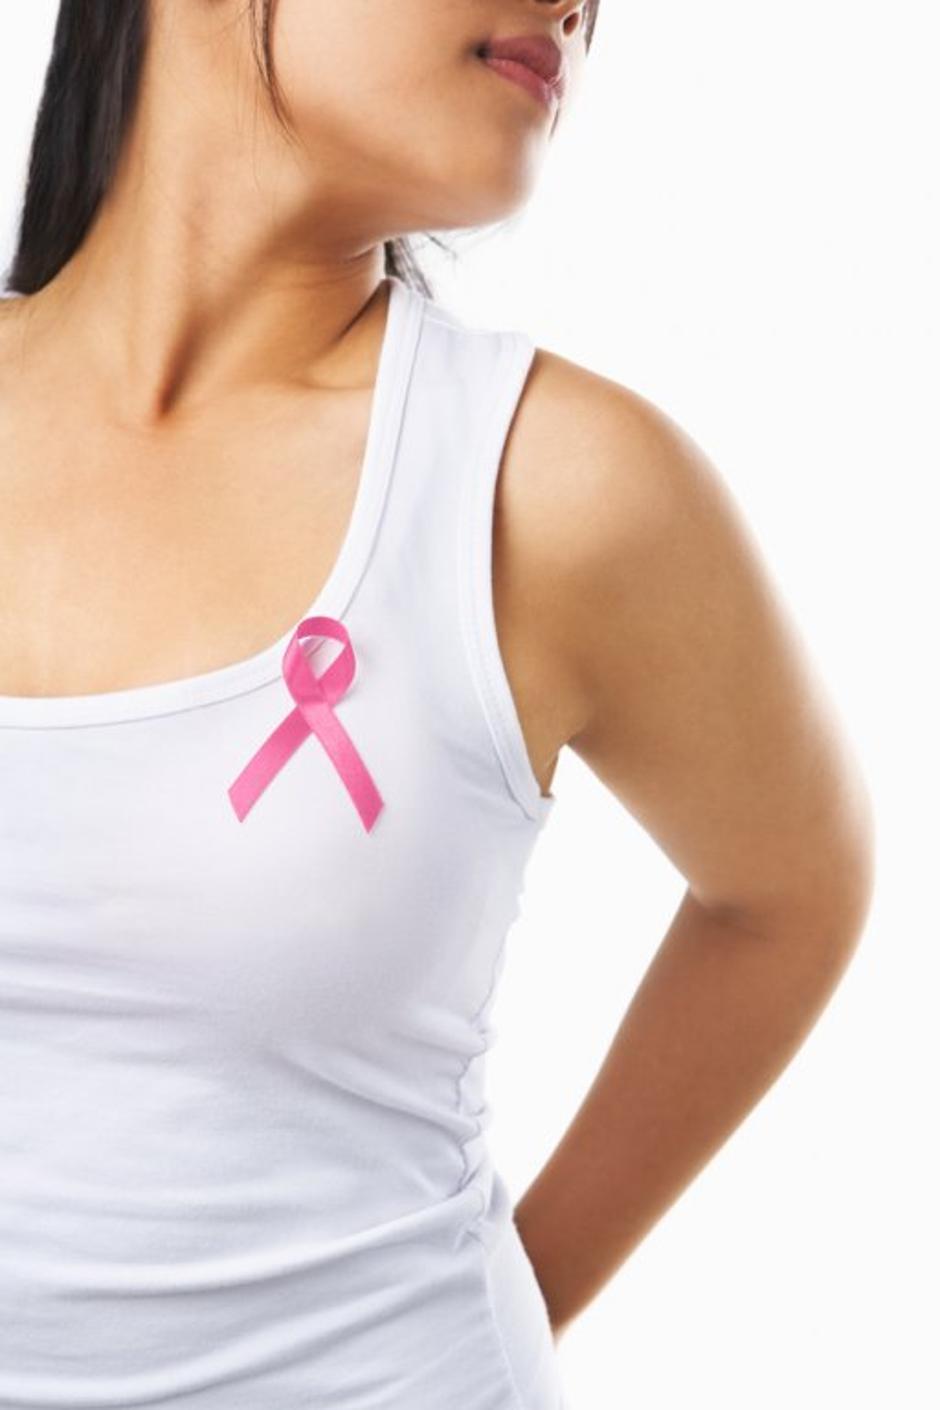 rak dojke, ženska | Avtor: Shutterstock